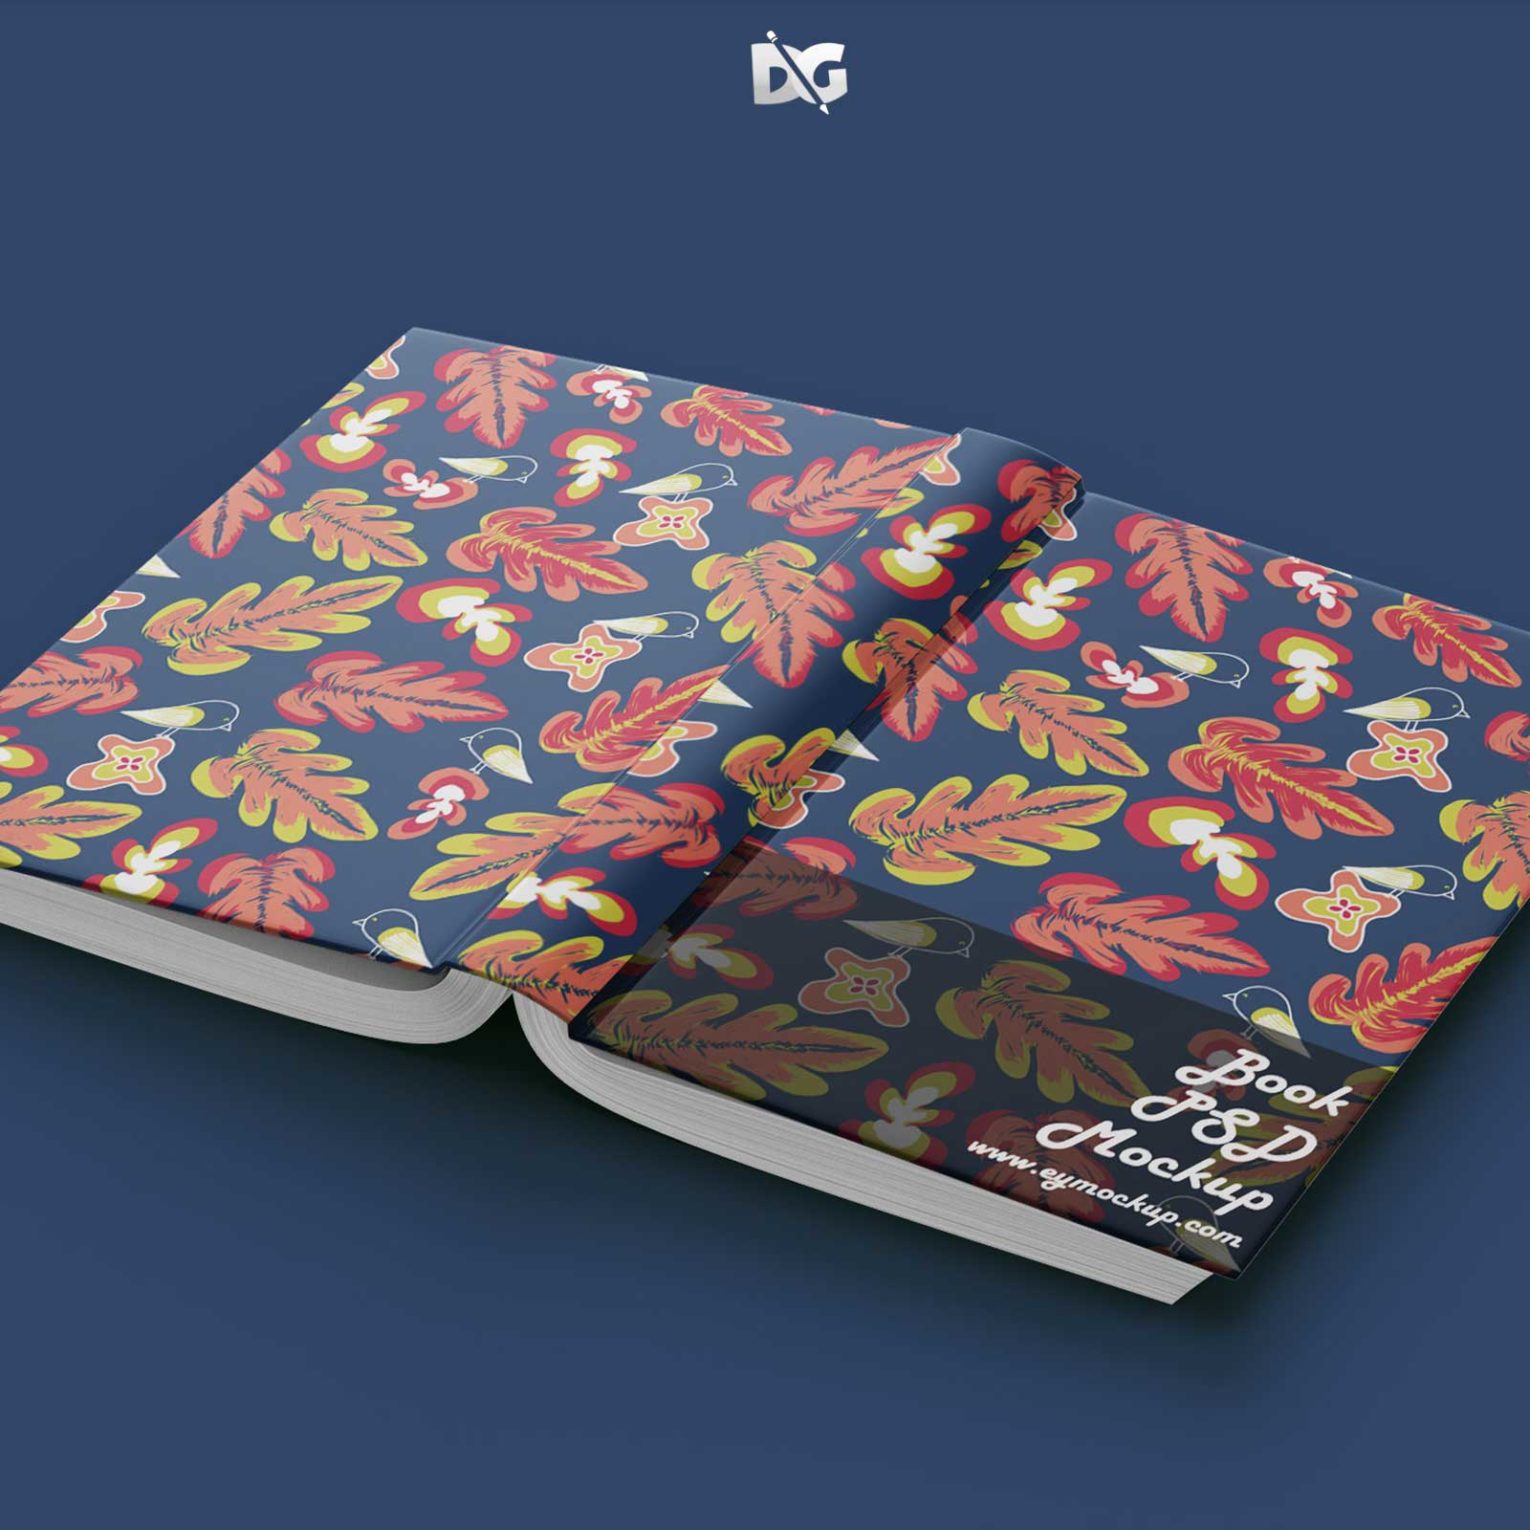 Download Book Cover PSD Mockup Download for Free - DesignHooks